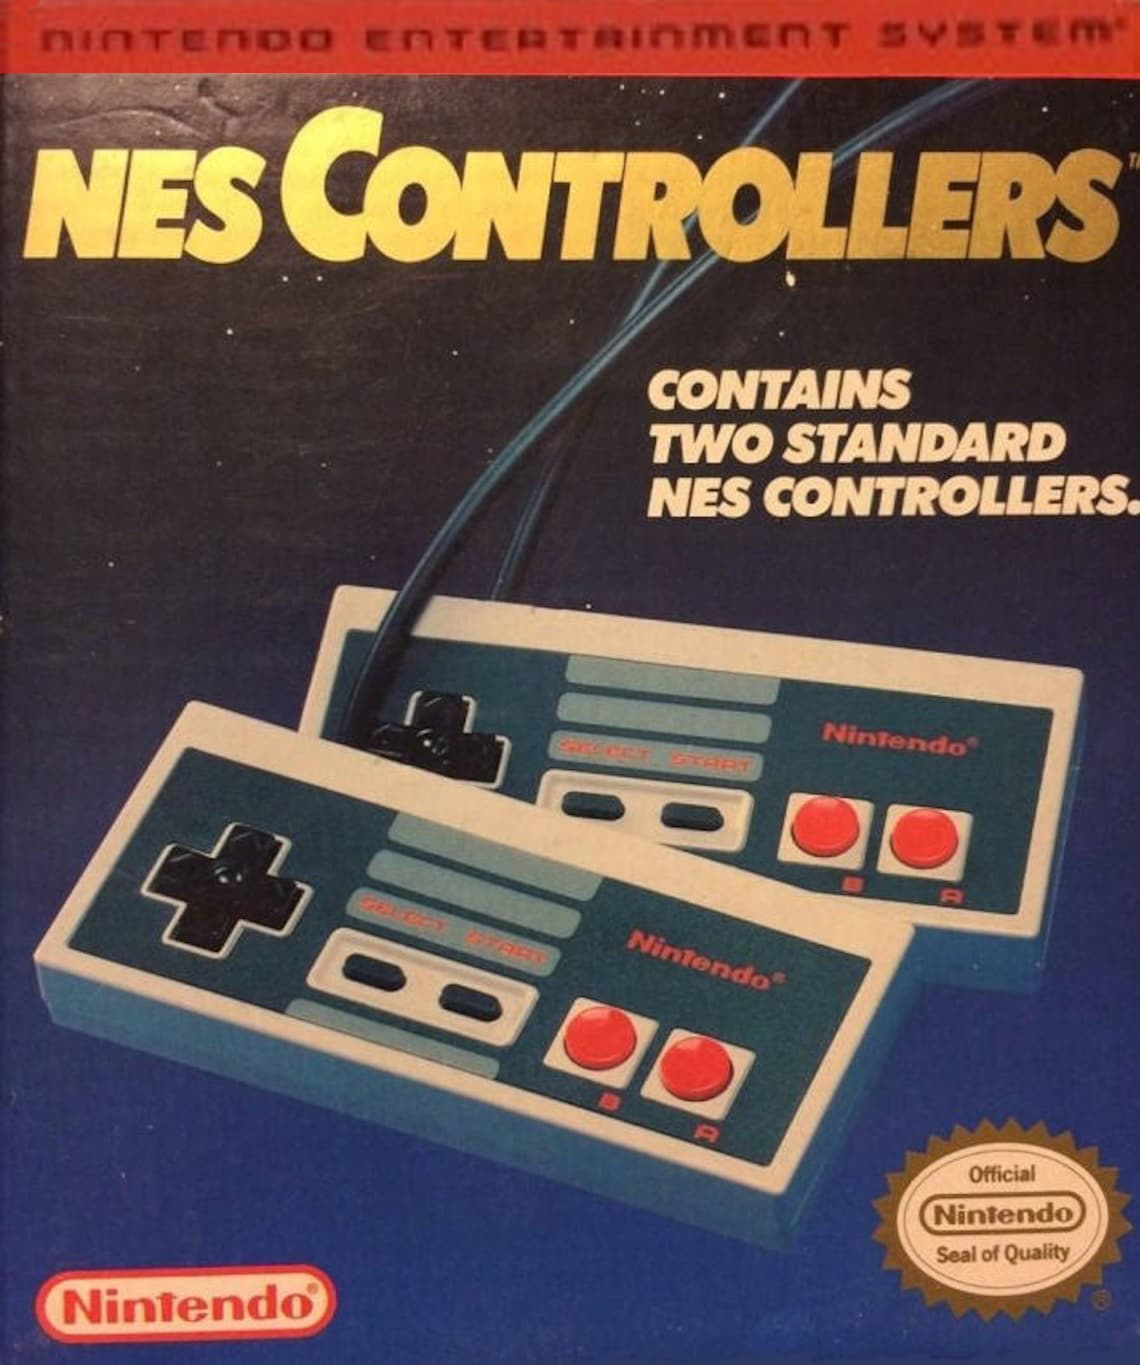 File:NES Controllers box.jpg